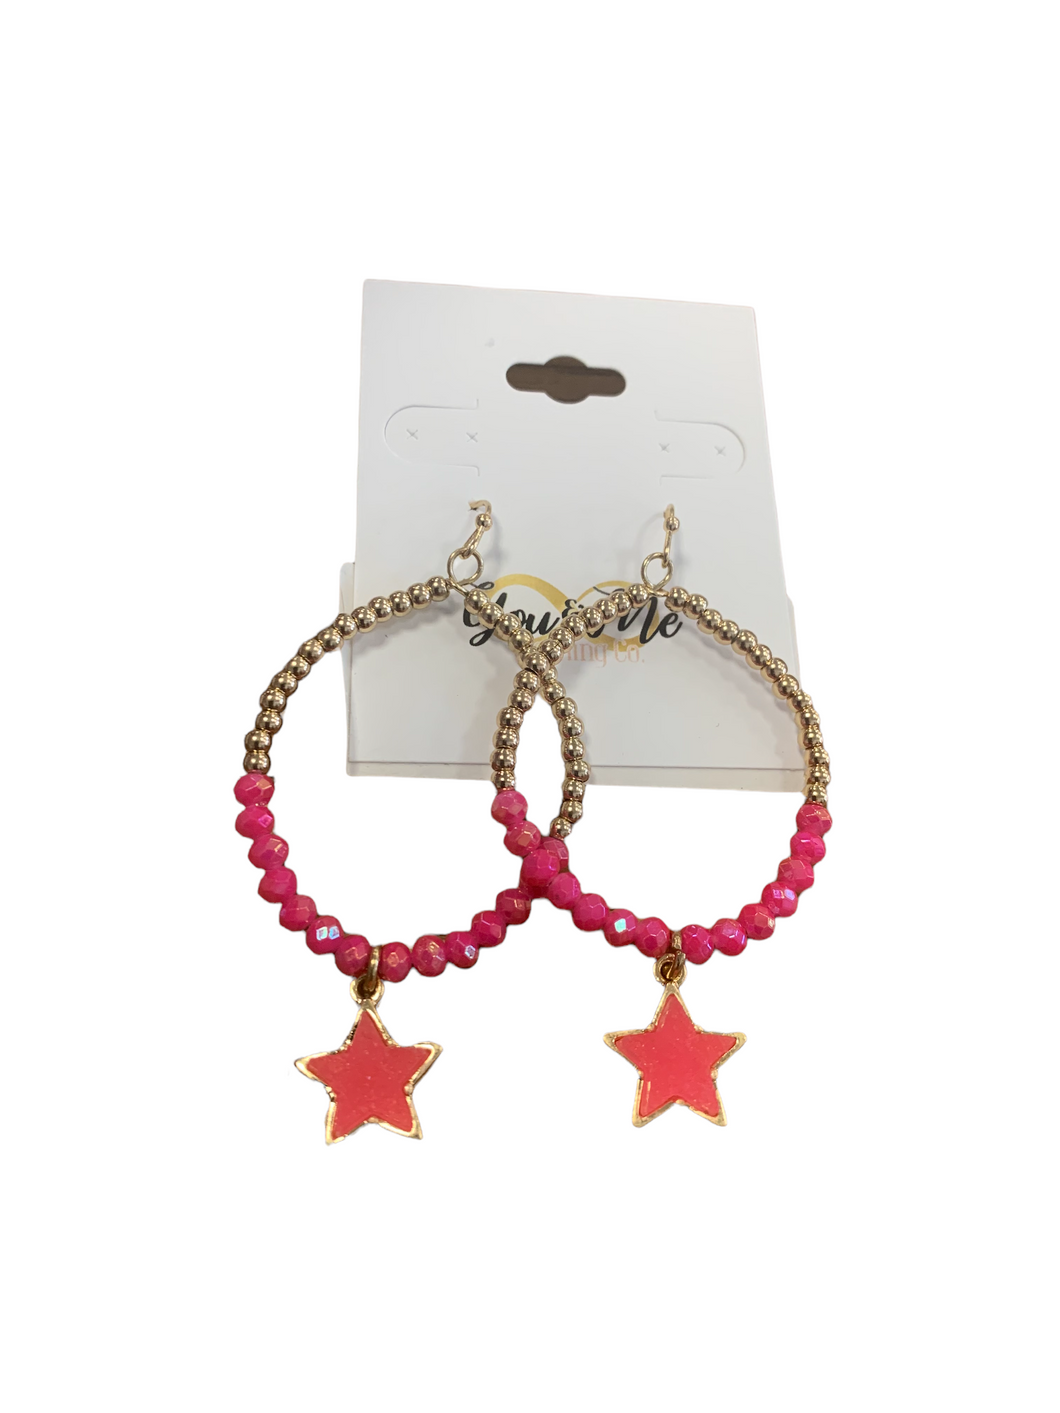 Hot Pink Beaded Pink Star Earrings